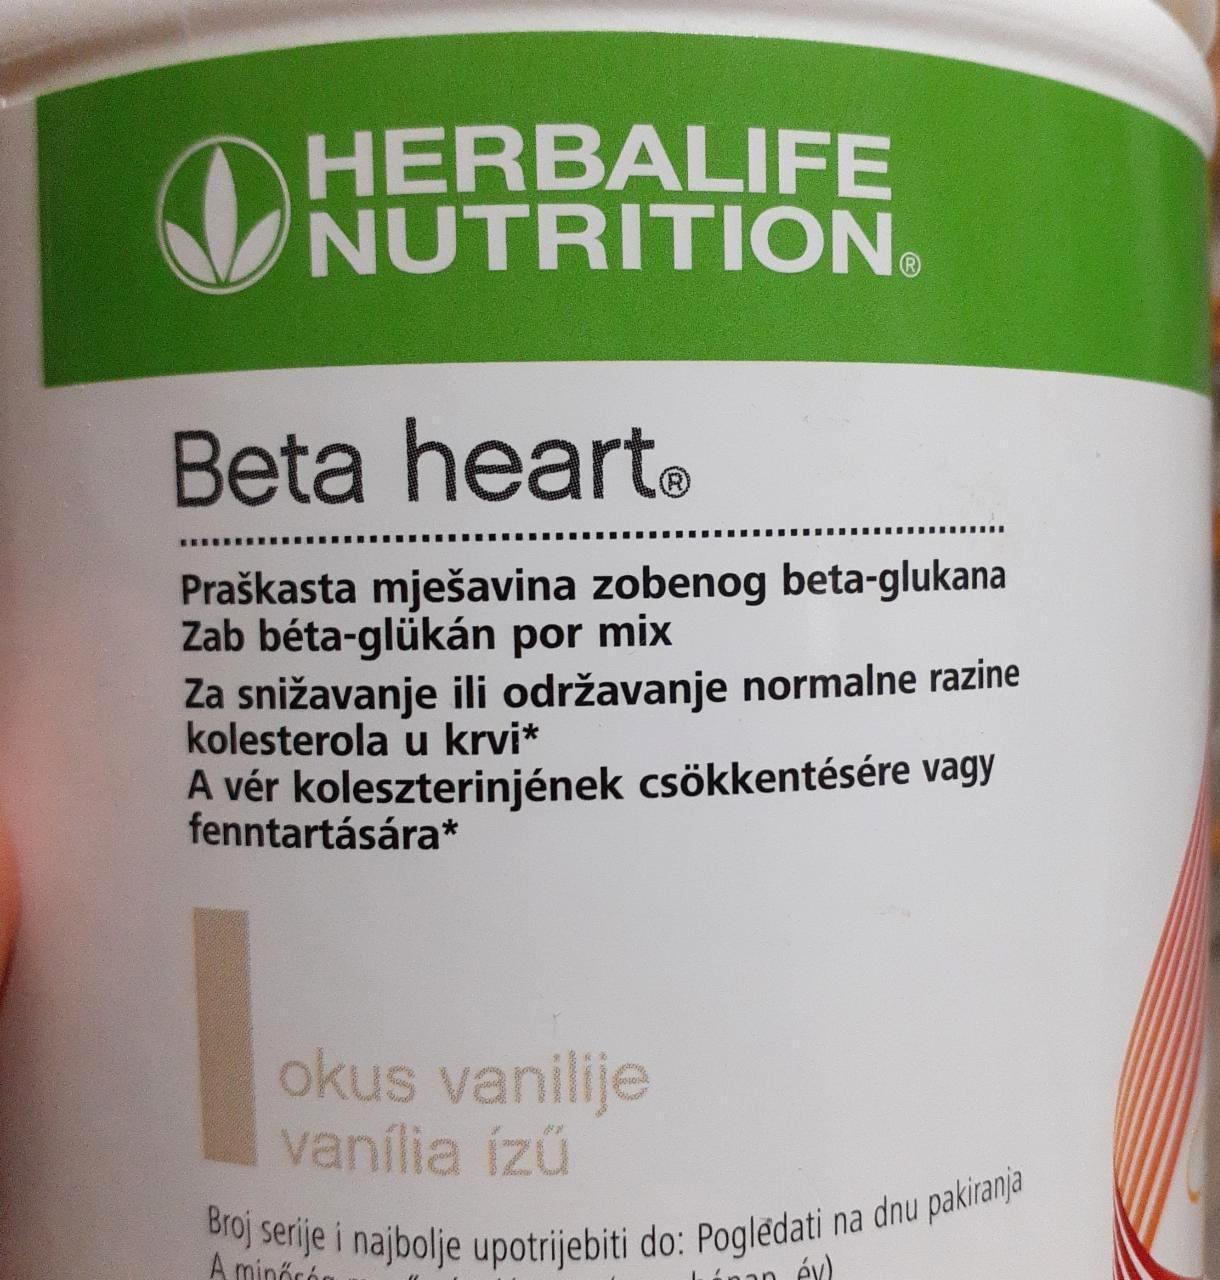 Képek - Beta heart Vaníliás Herbalife nutrition